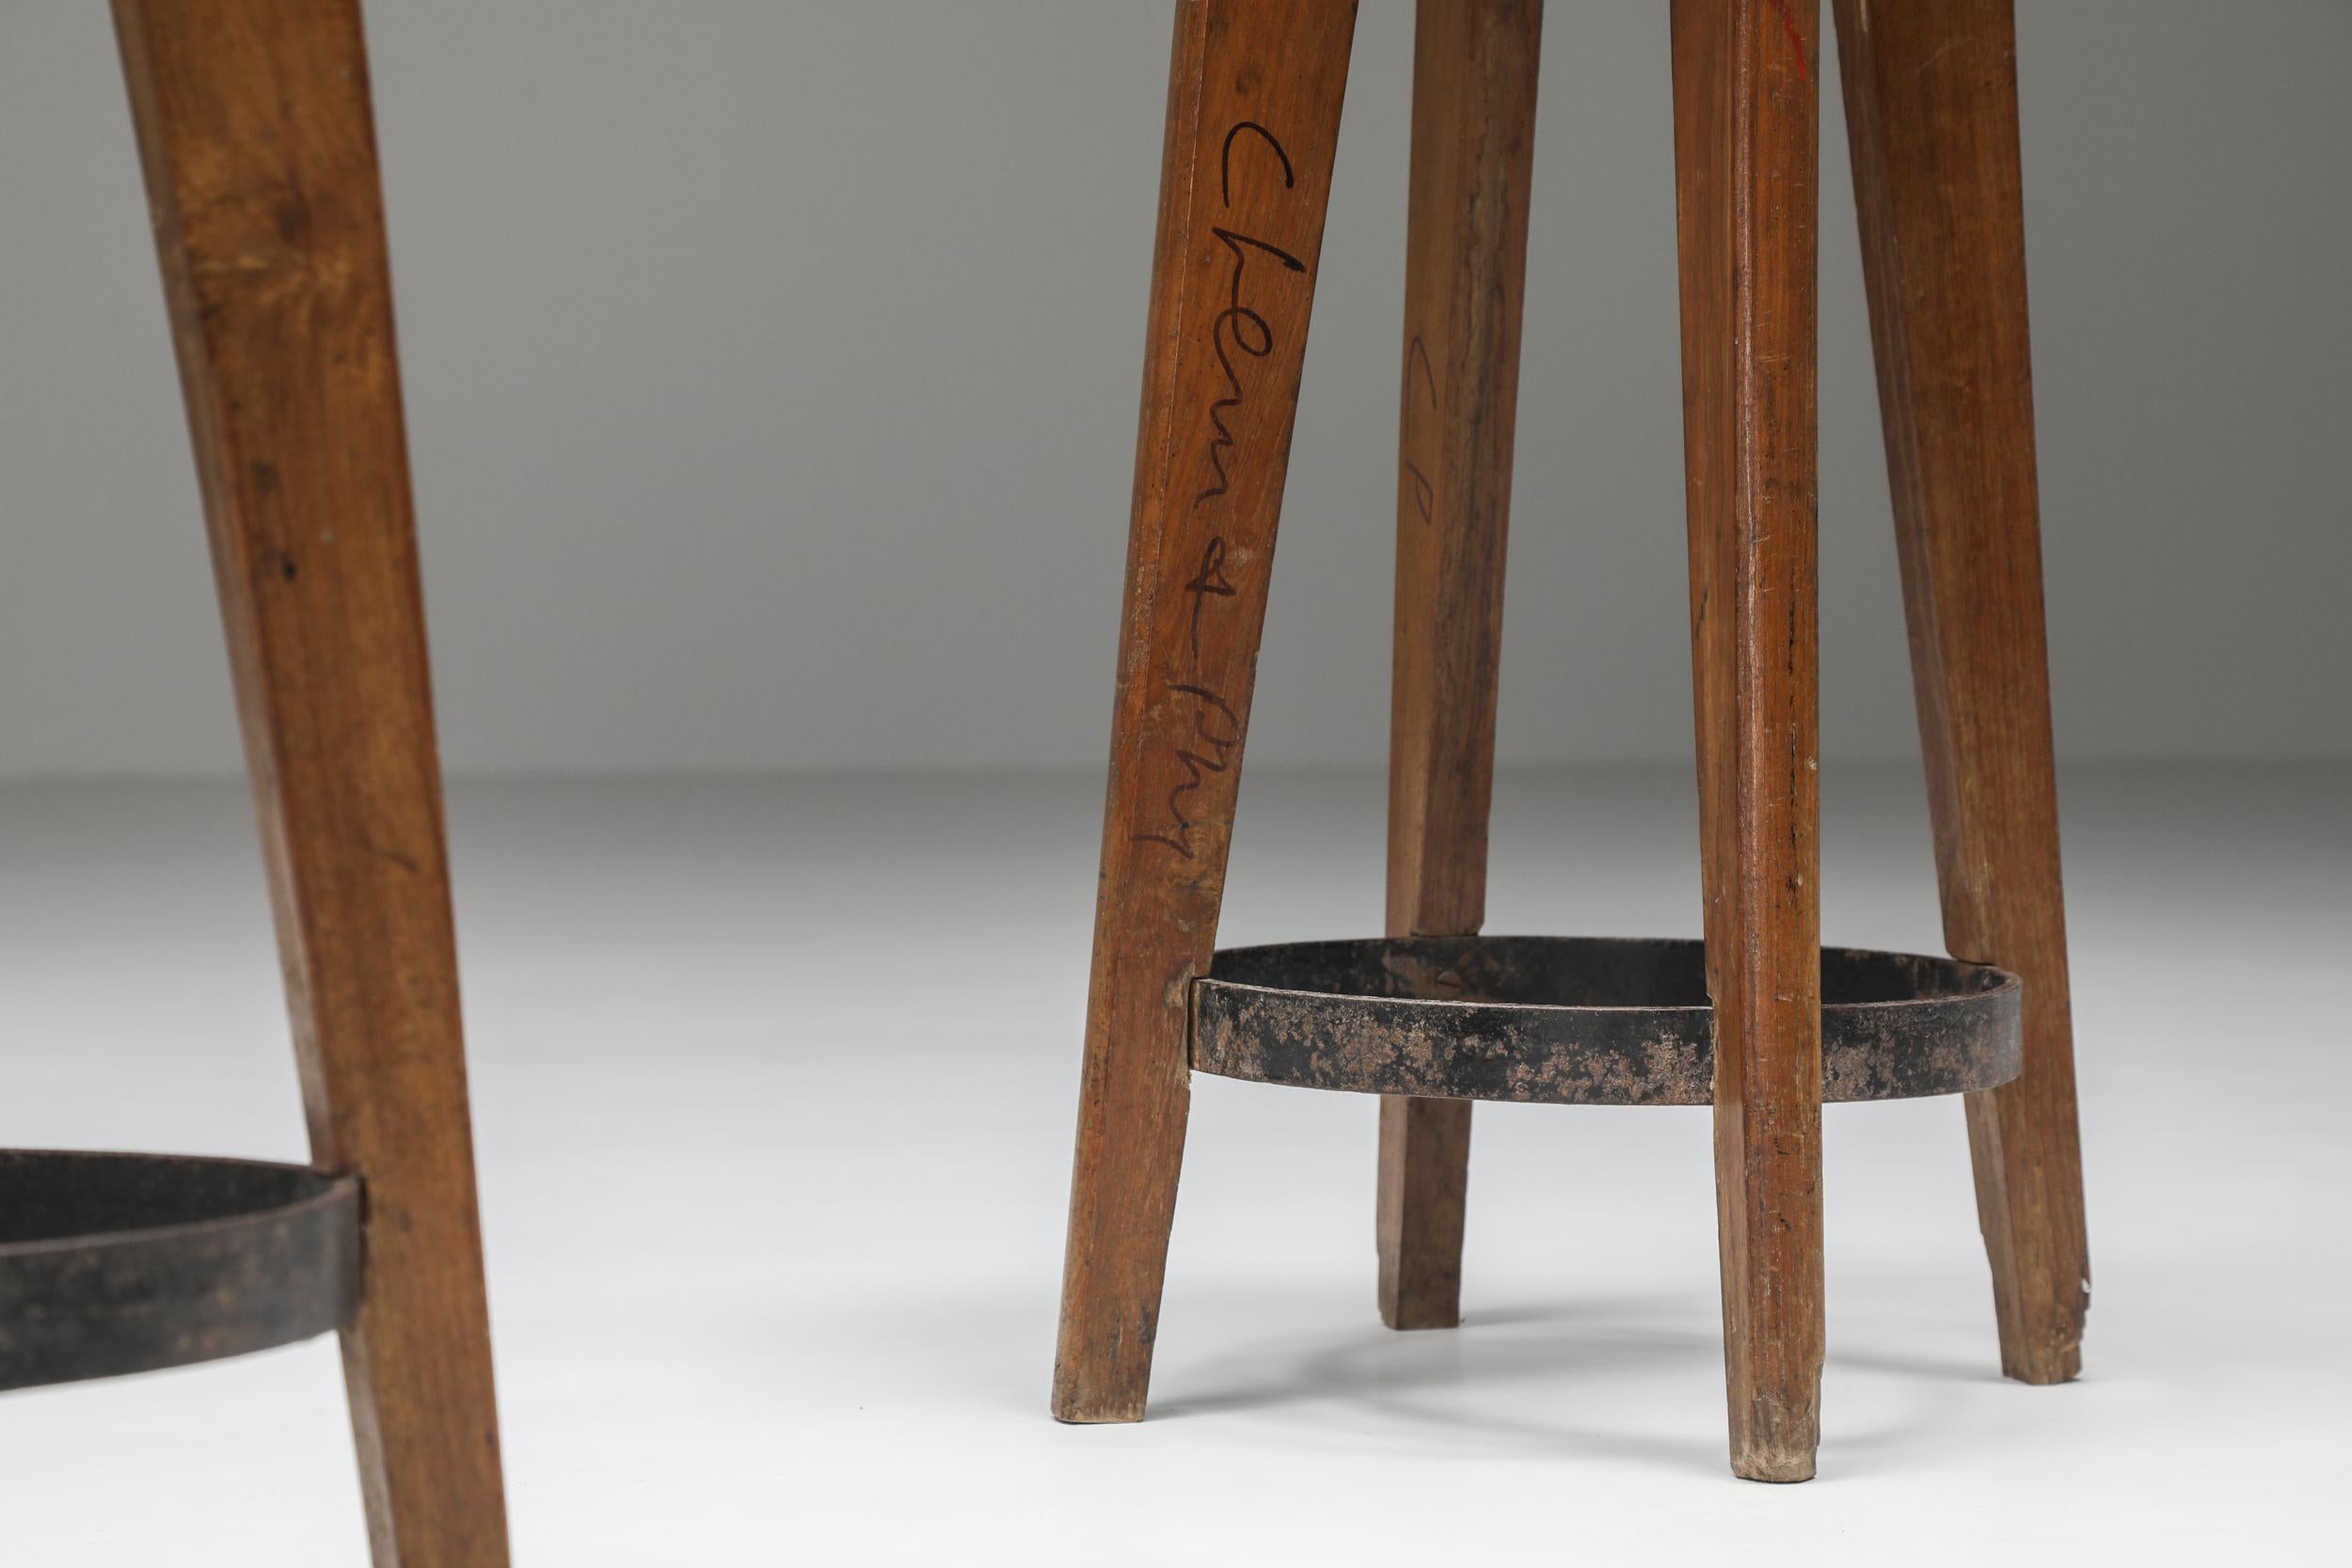 Mid-20th Century Pierre Jeanneret Stools 1965-1967, Authentic Mid-Century Modern Chandigarh